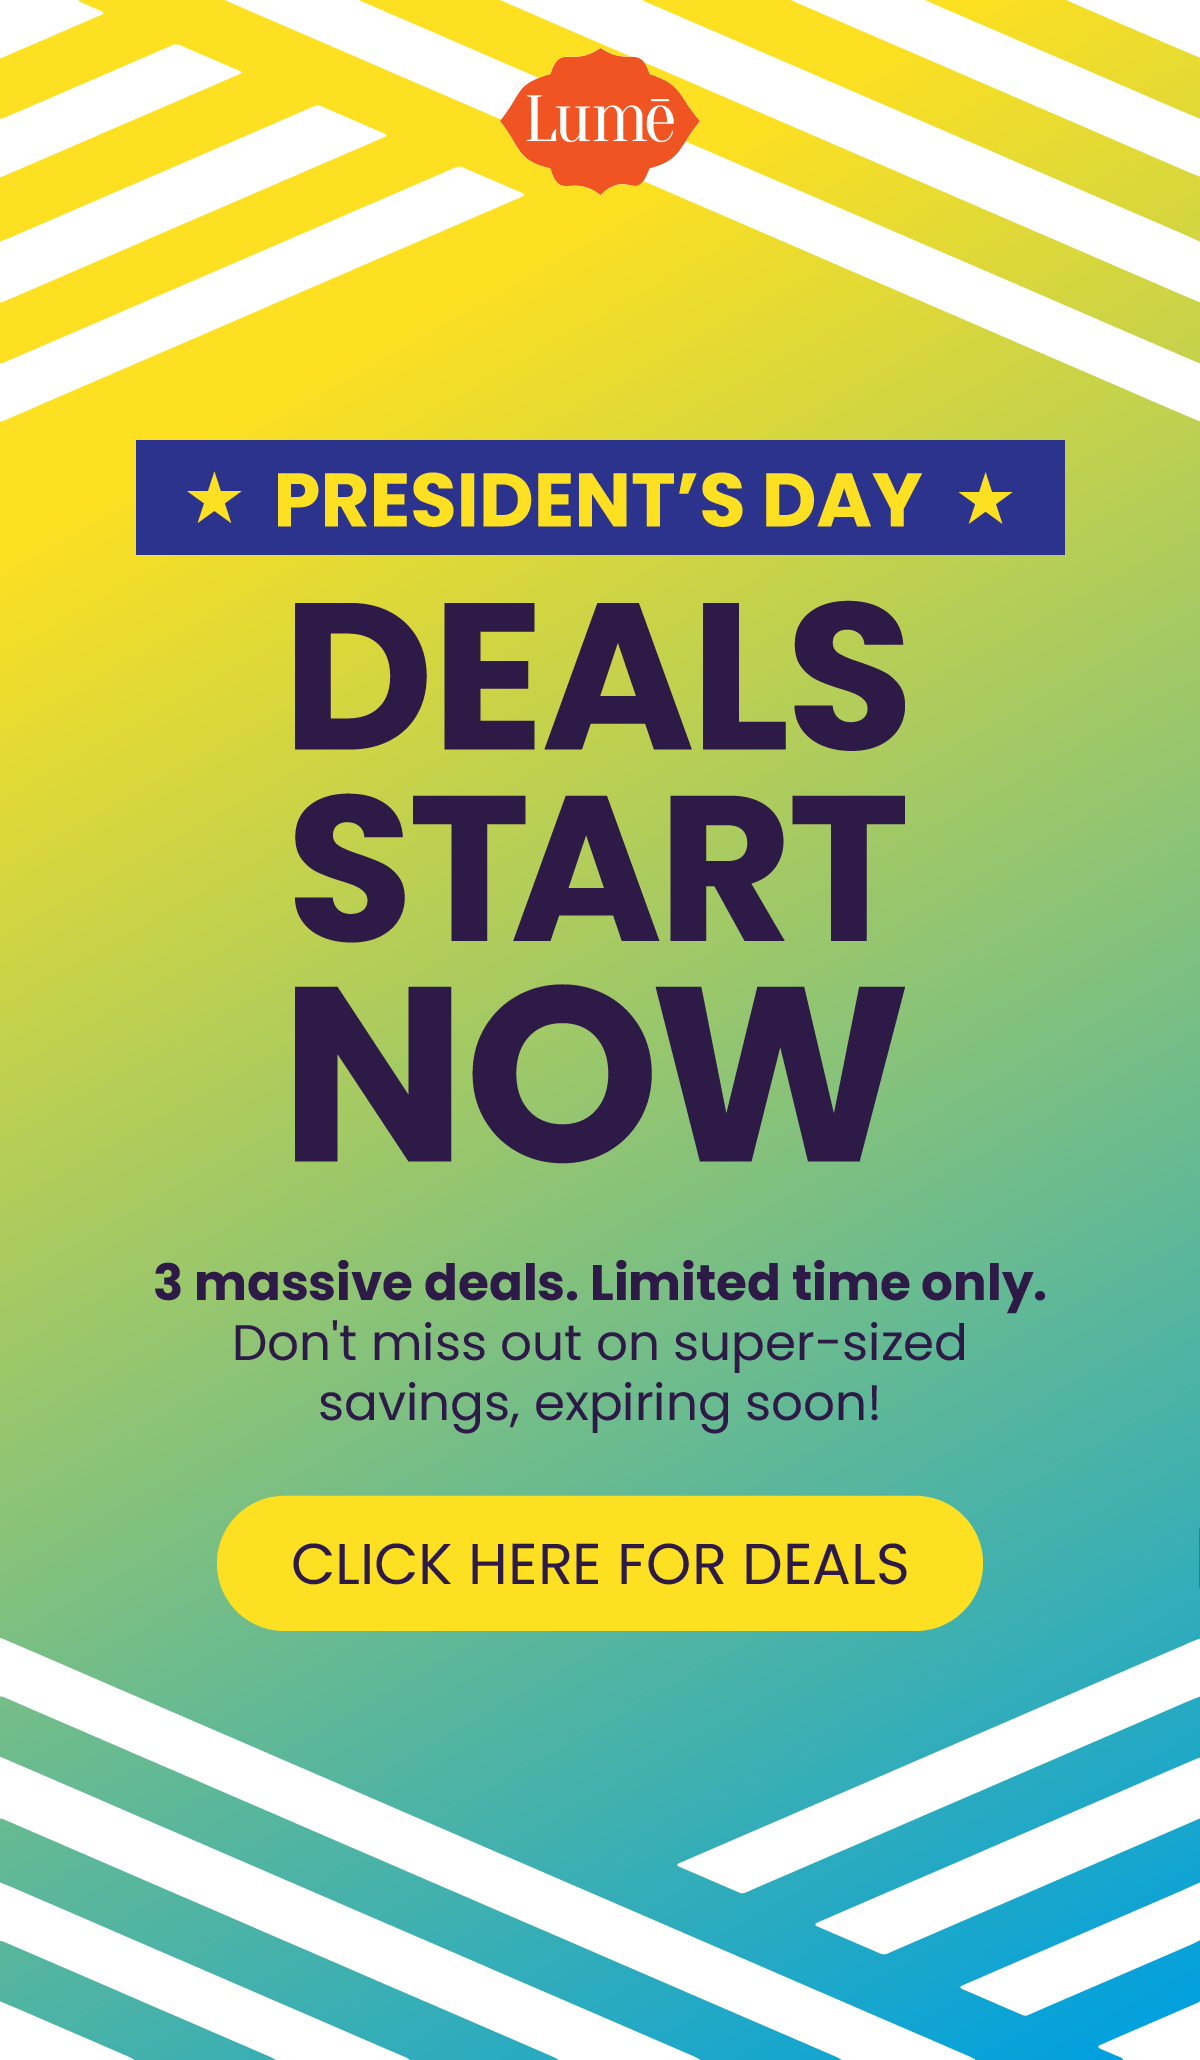 President's Day Deals Start Now